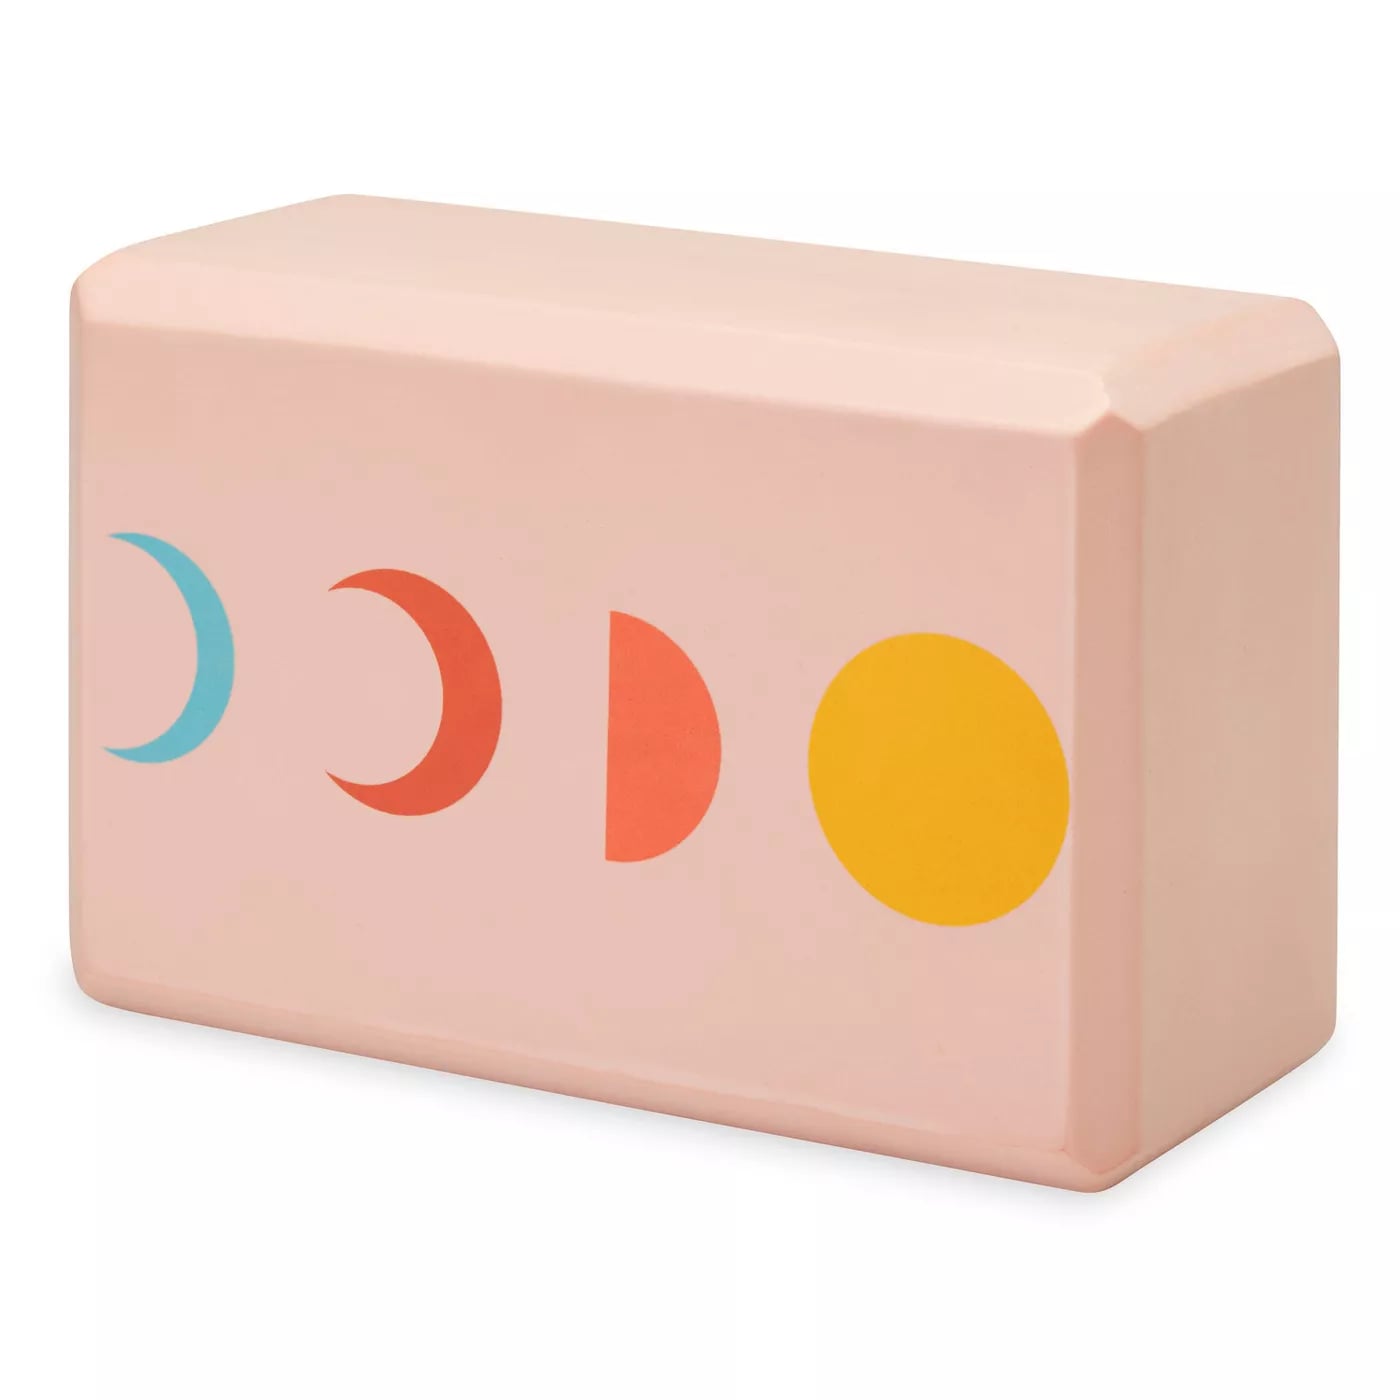 Cushioned Yoga Block: POPSUGAR Yoga Block in Pink Moon Phases